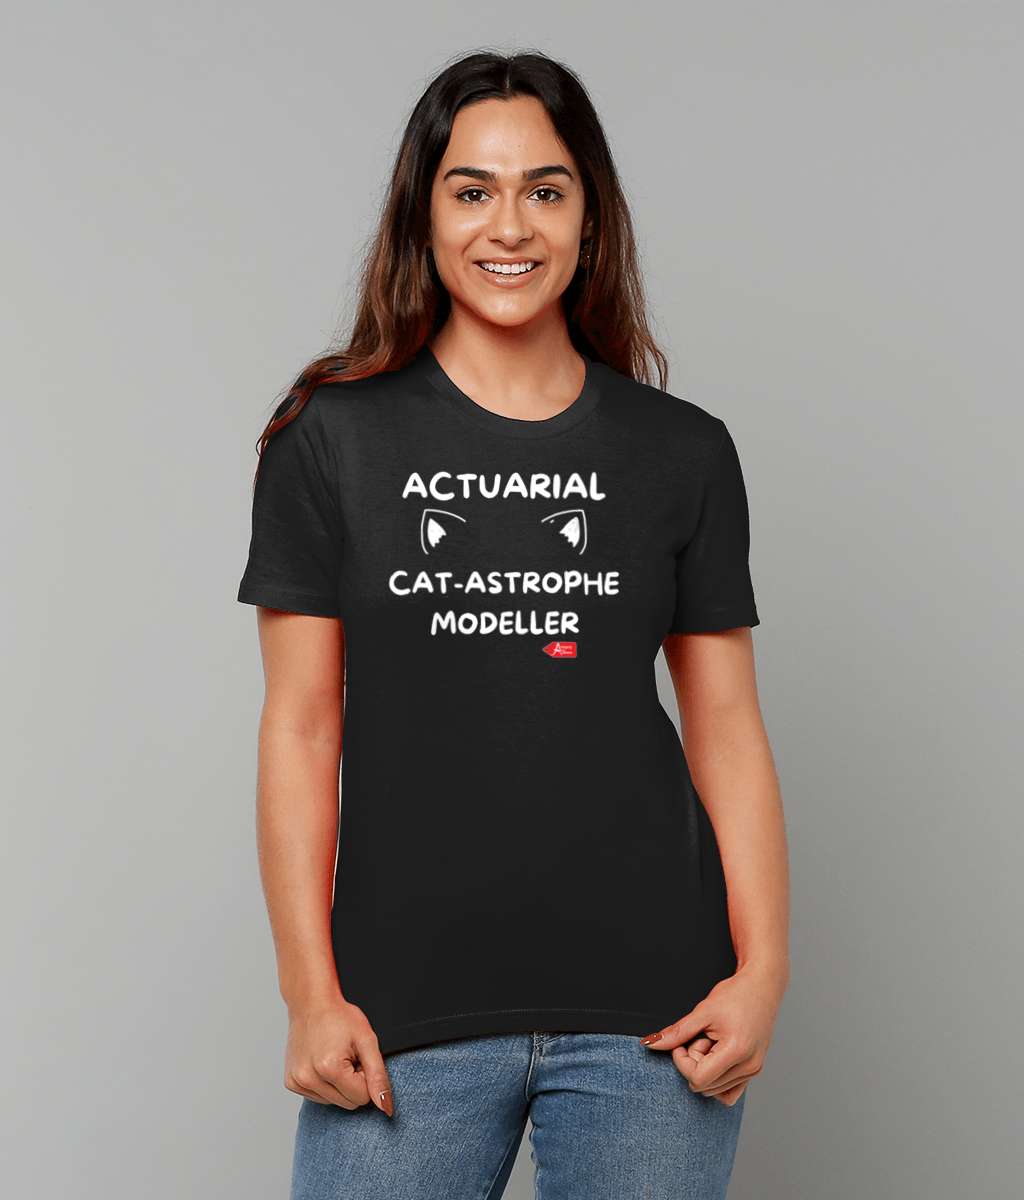 Actuarial Cat-Astrophe Modeller T-Shirt